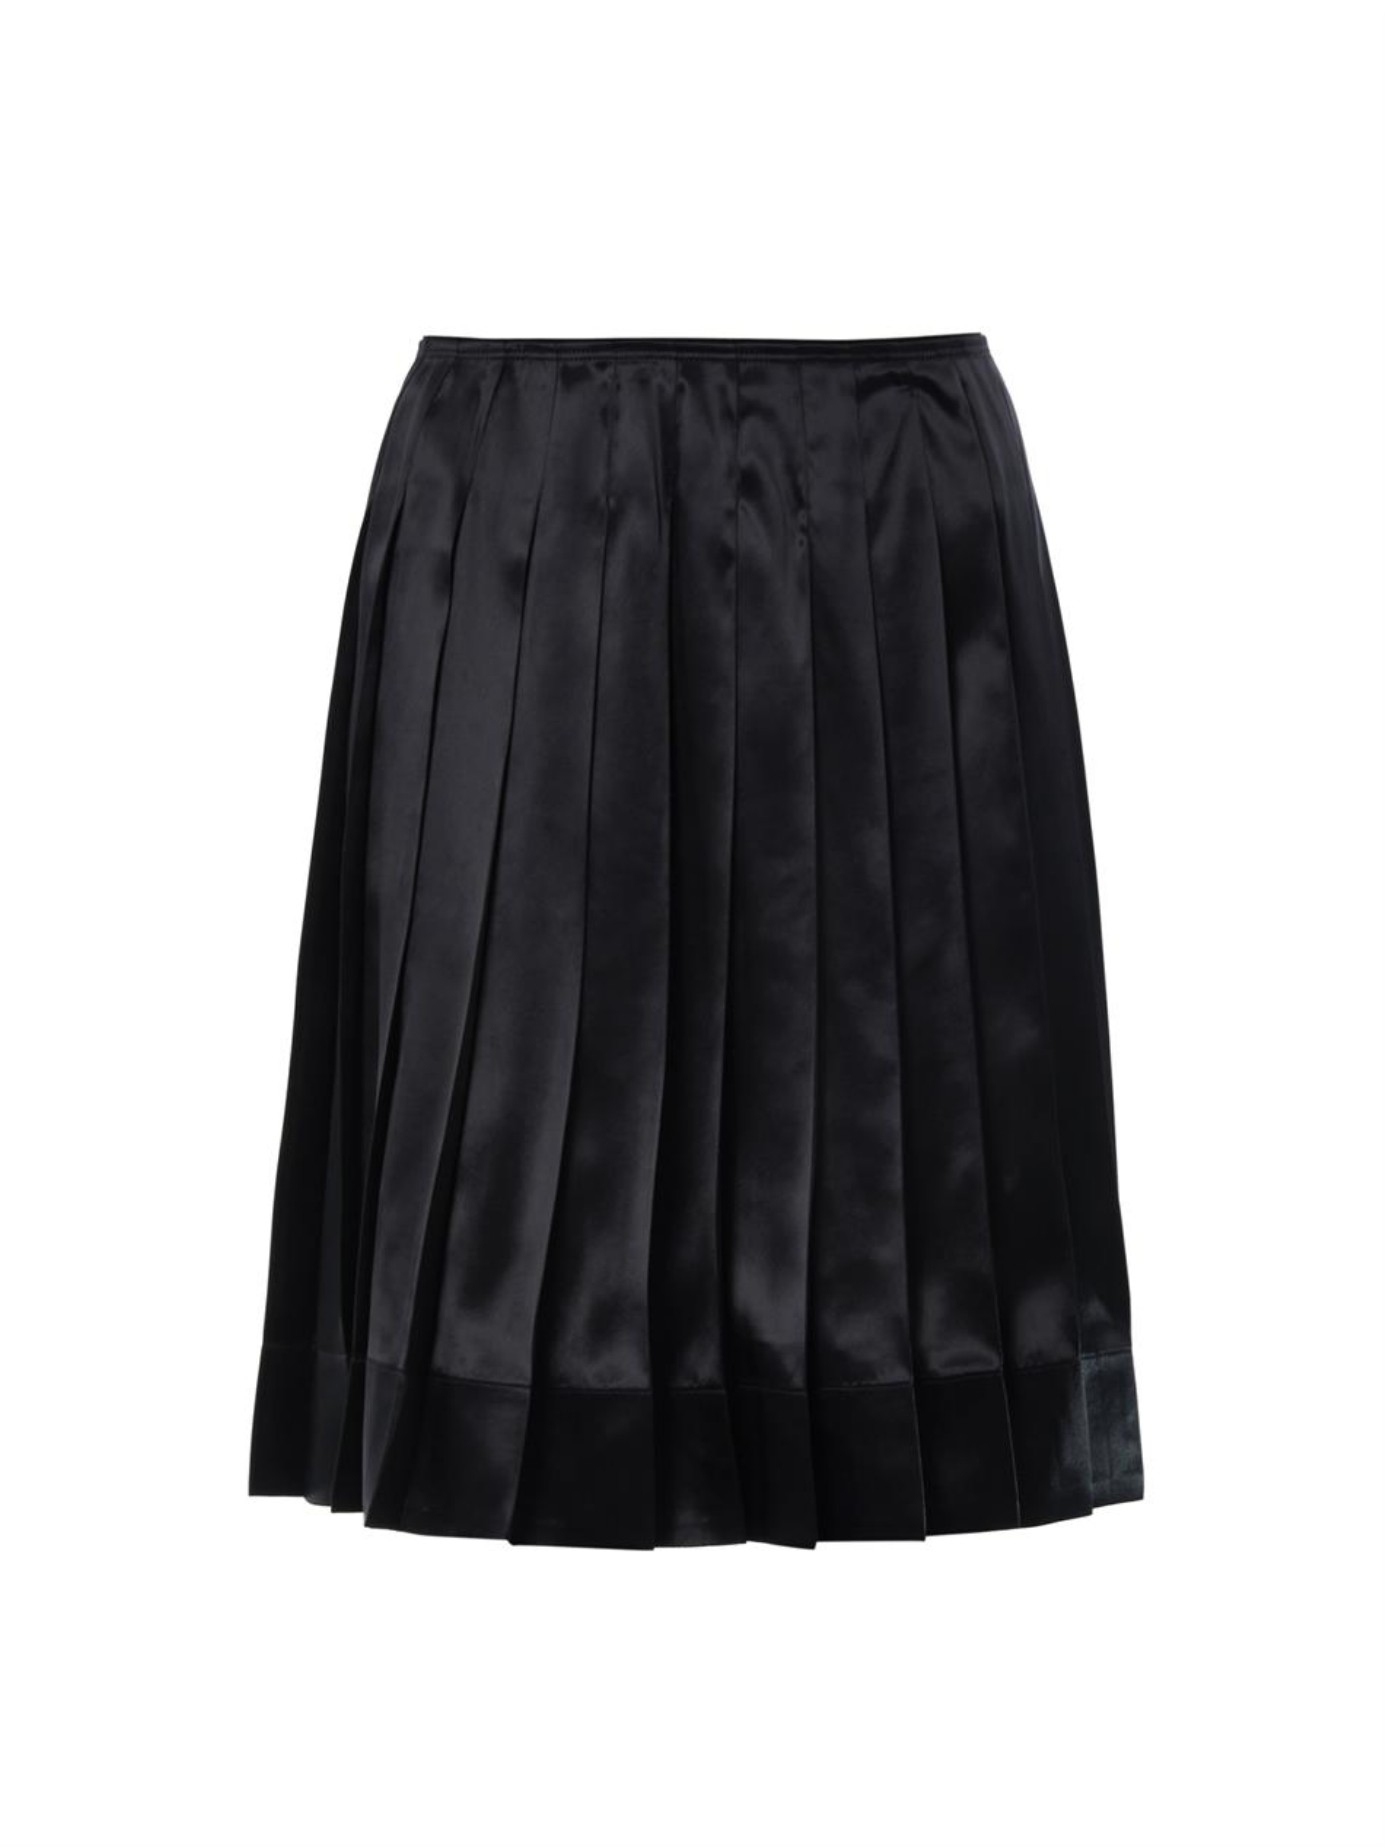 Lyst - Marc Jacobs Pleated Silk-satin Skirt in Black